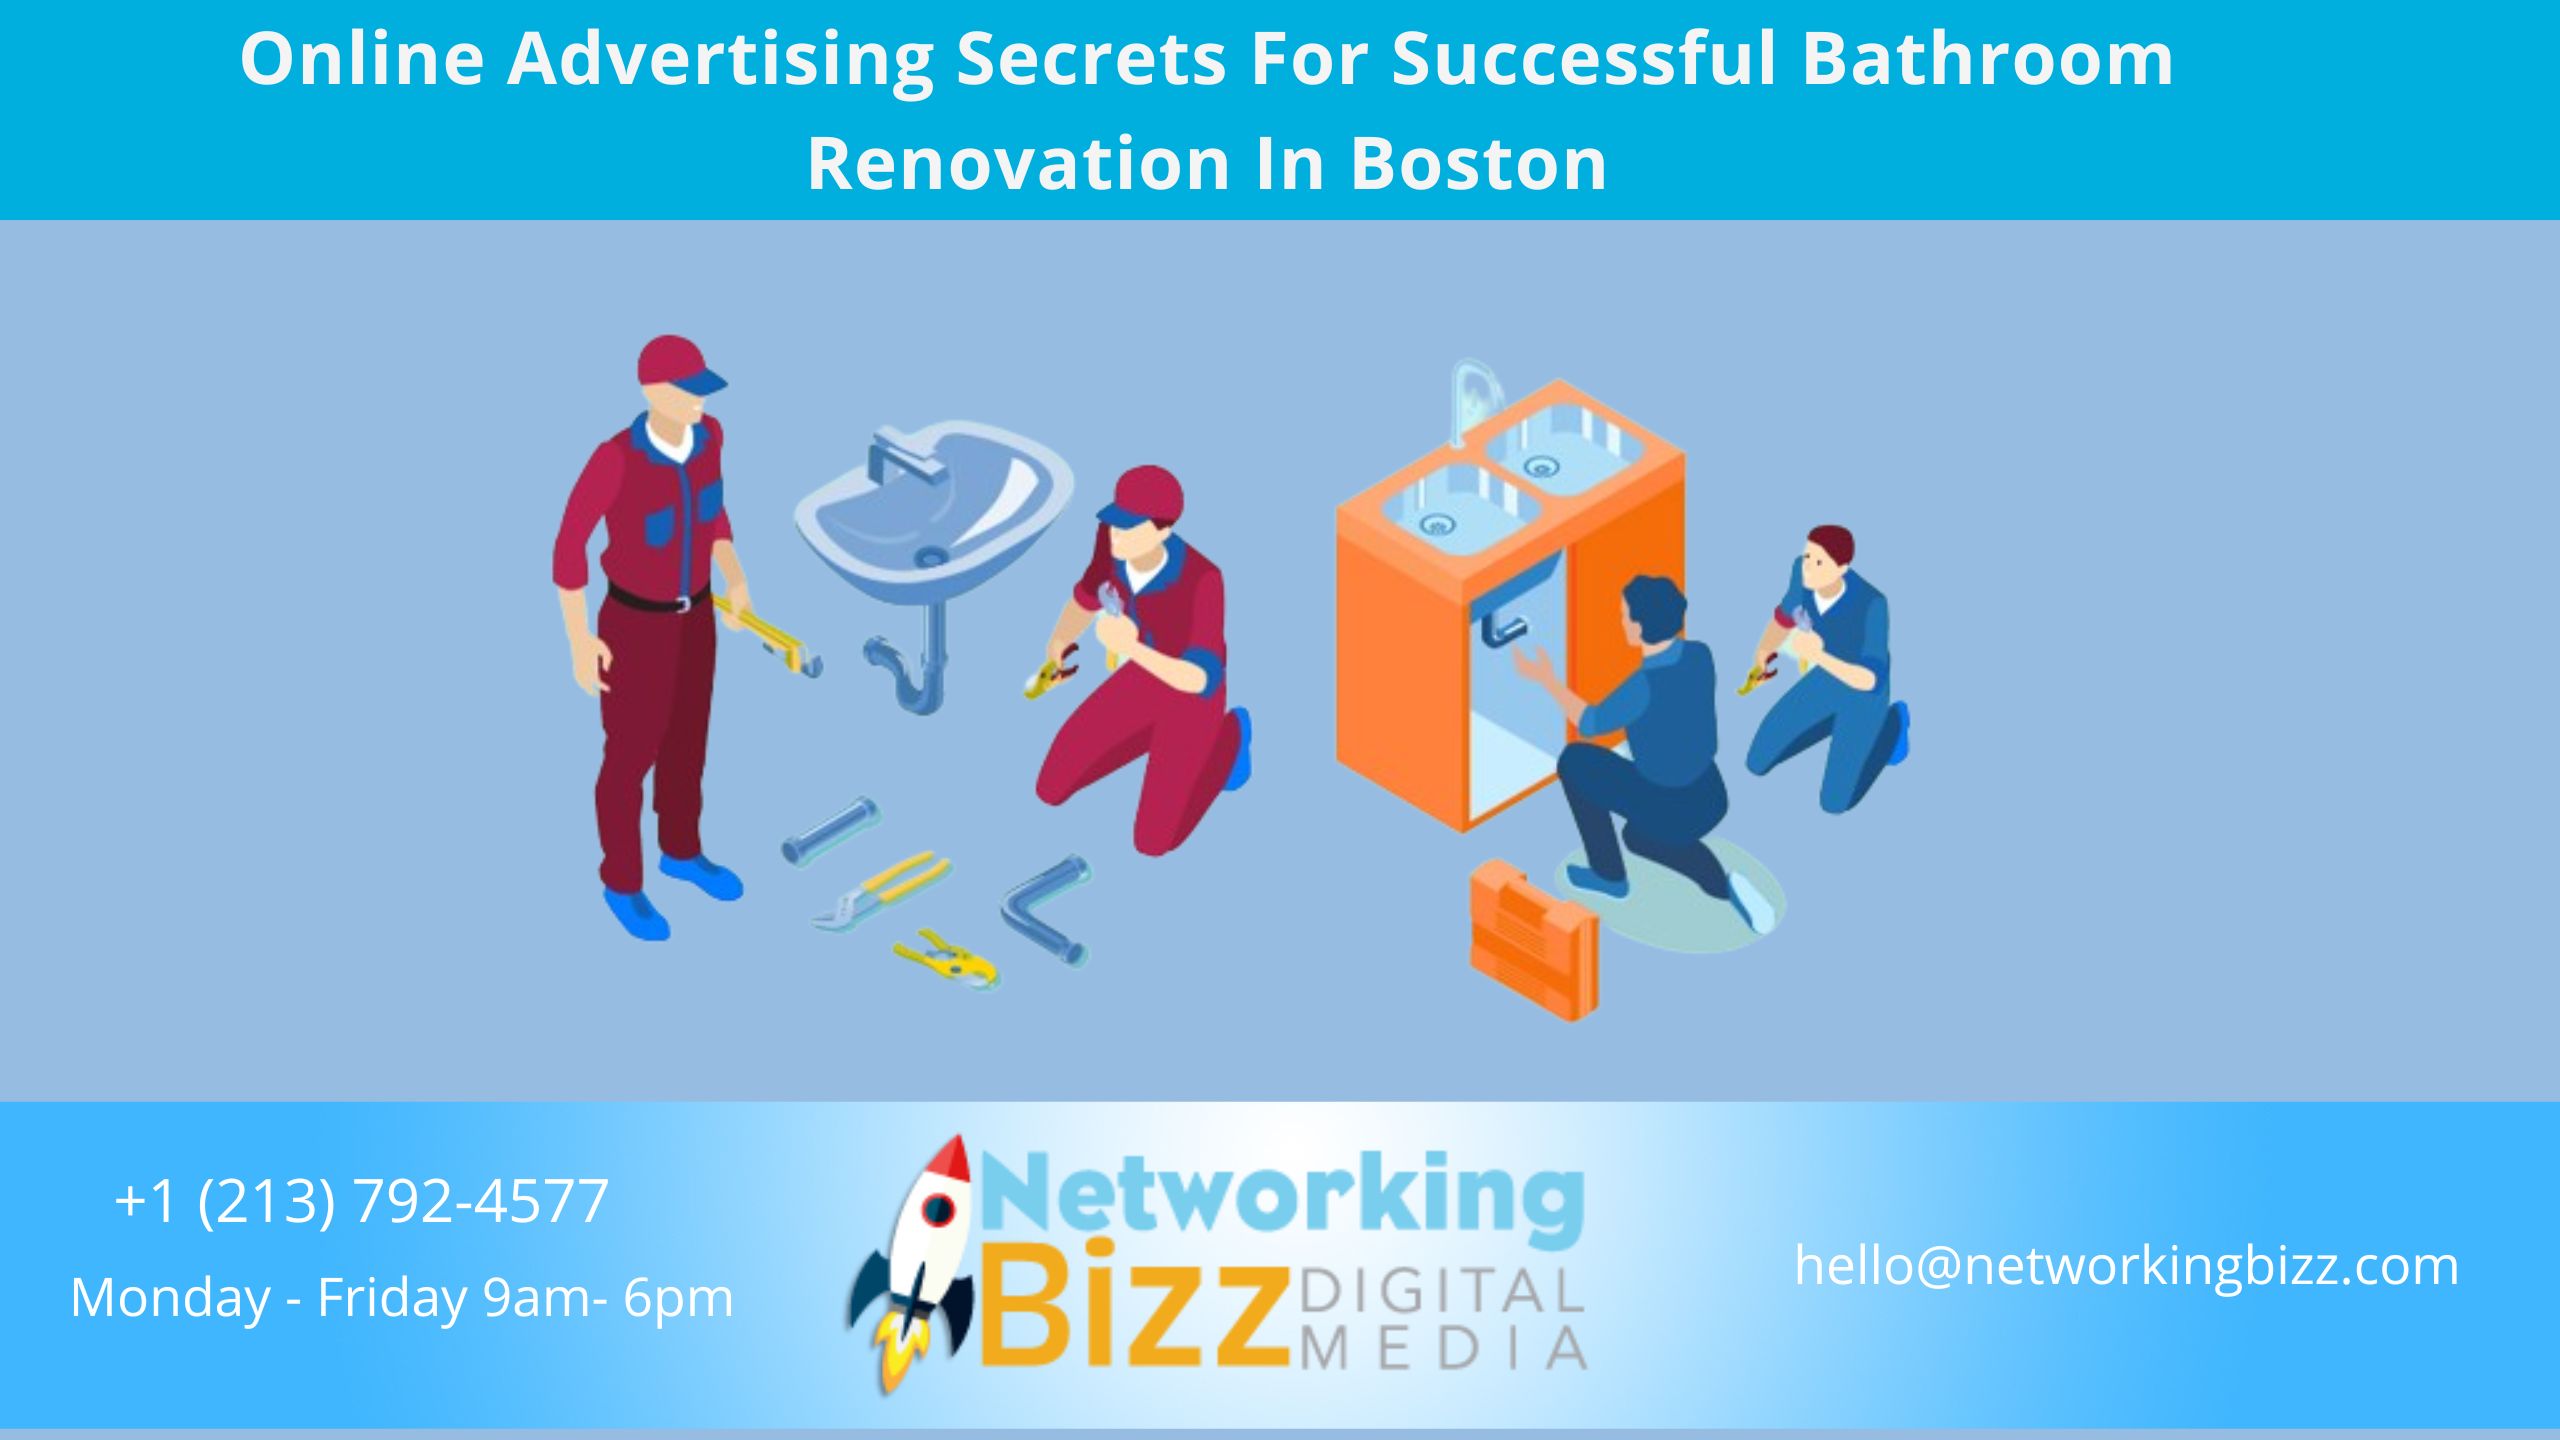 Online Advertising Secrets For Successful Bathroom Renovation In Boston